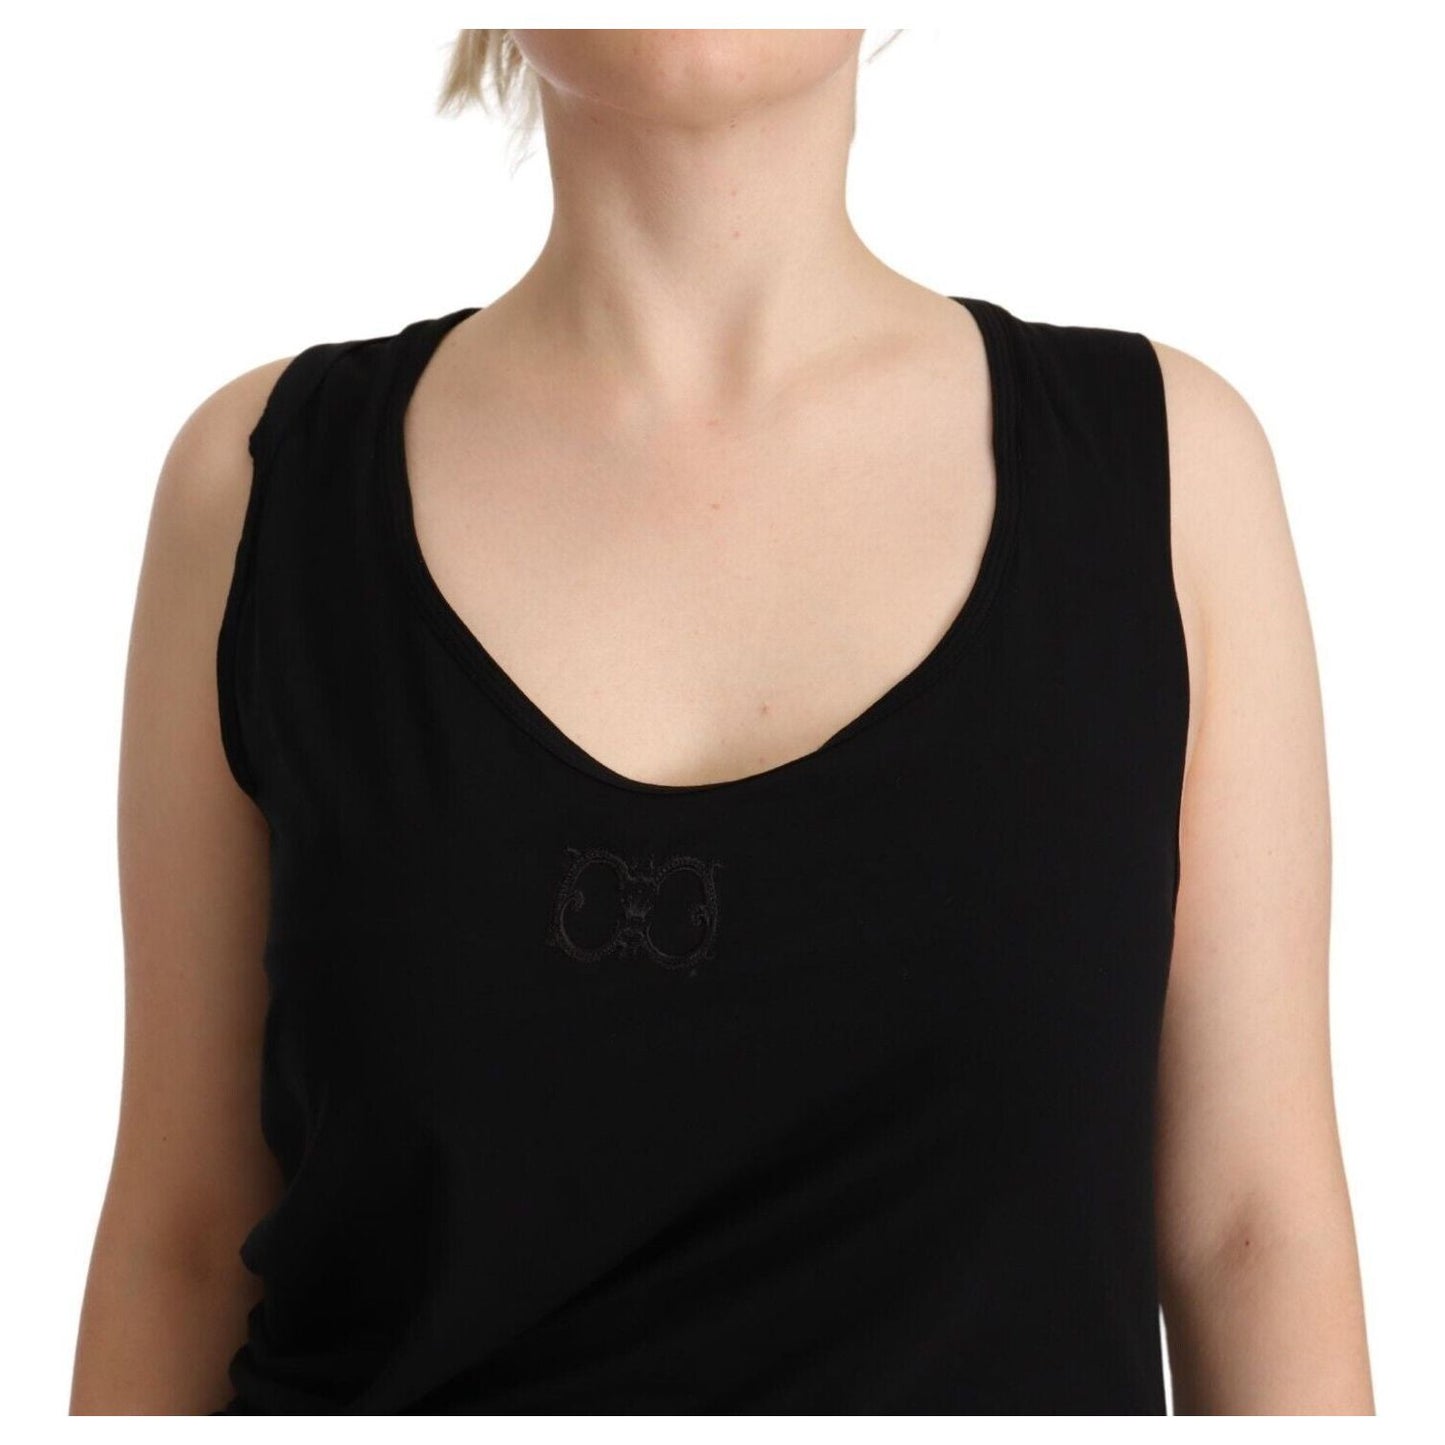 Roberto Cavalli Elegant Black Sheath Stretch Dress black-sleeveless-cotton-sheath-mini-dress WOMAN DRESSES s-l1600-3-70-47b7ed03-46e.jpg